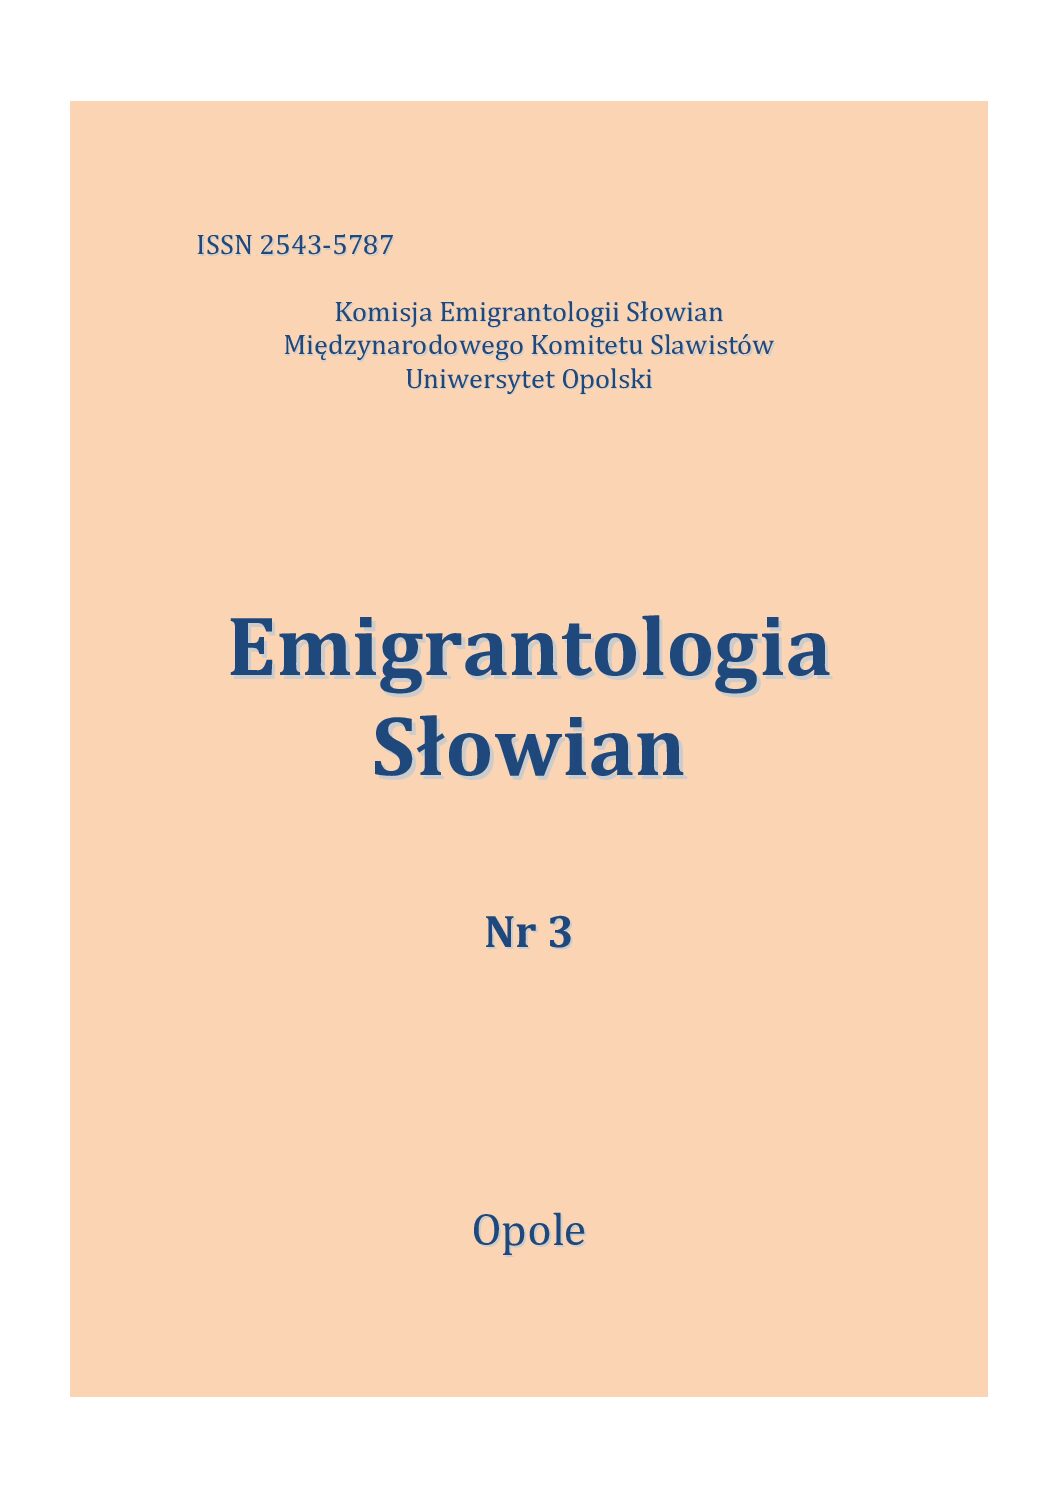 “Emigrantologia Słowian” vol. 3 (2017)